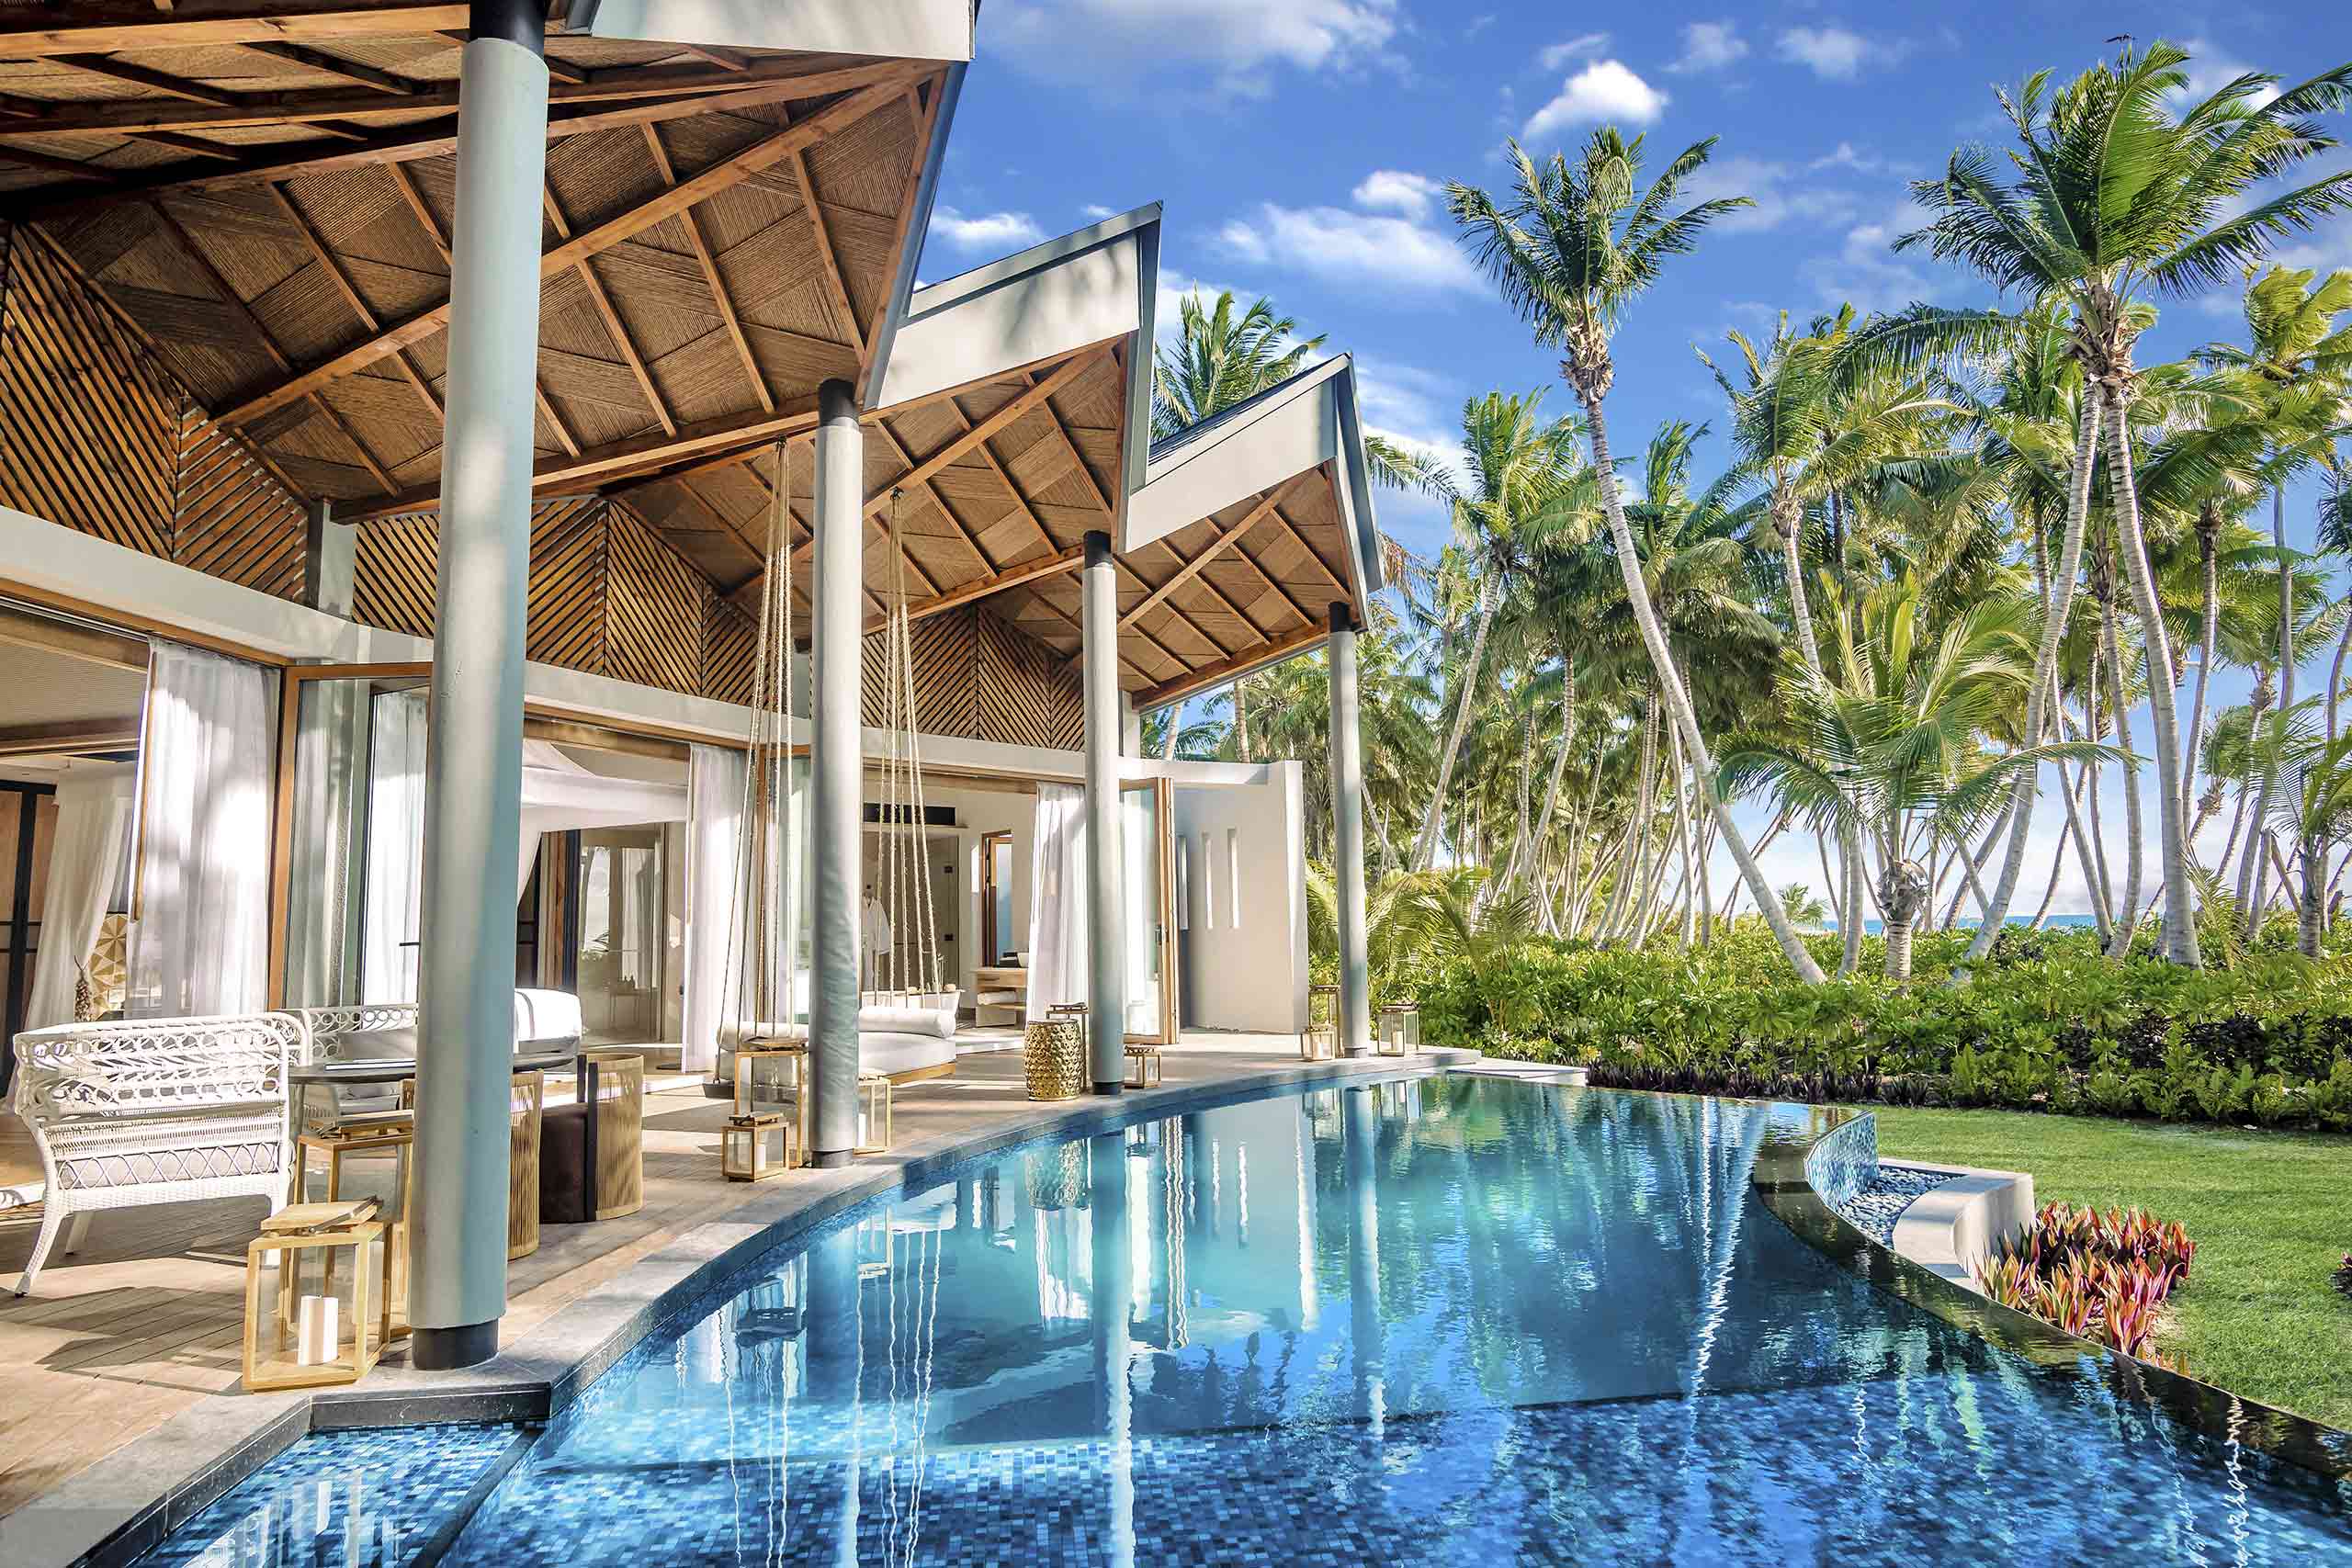 Waldorf Astoria Platte Island, a new Seychelles wellness holiday option